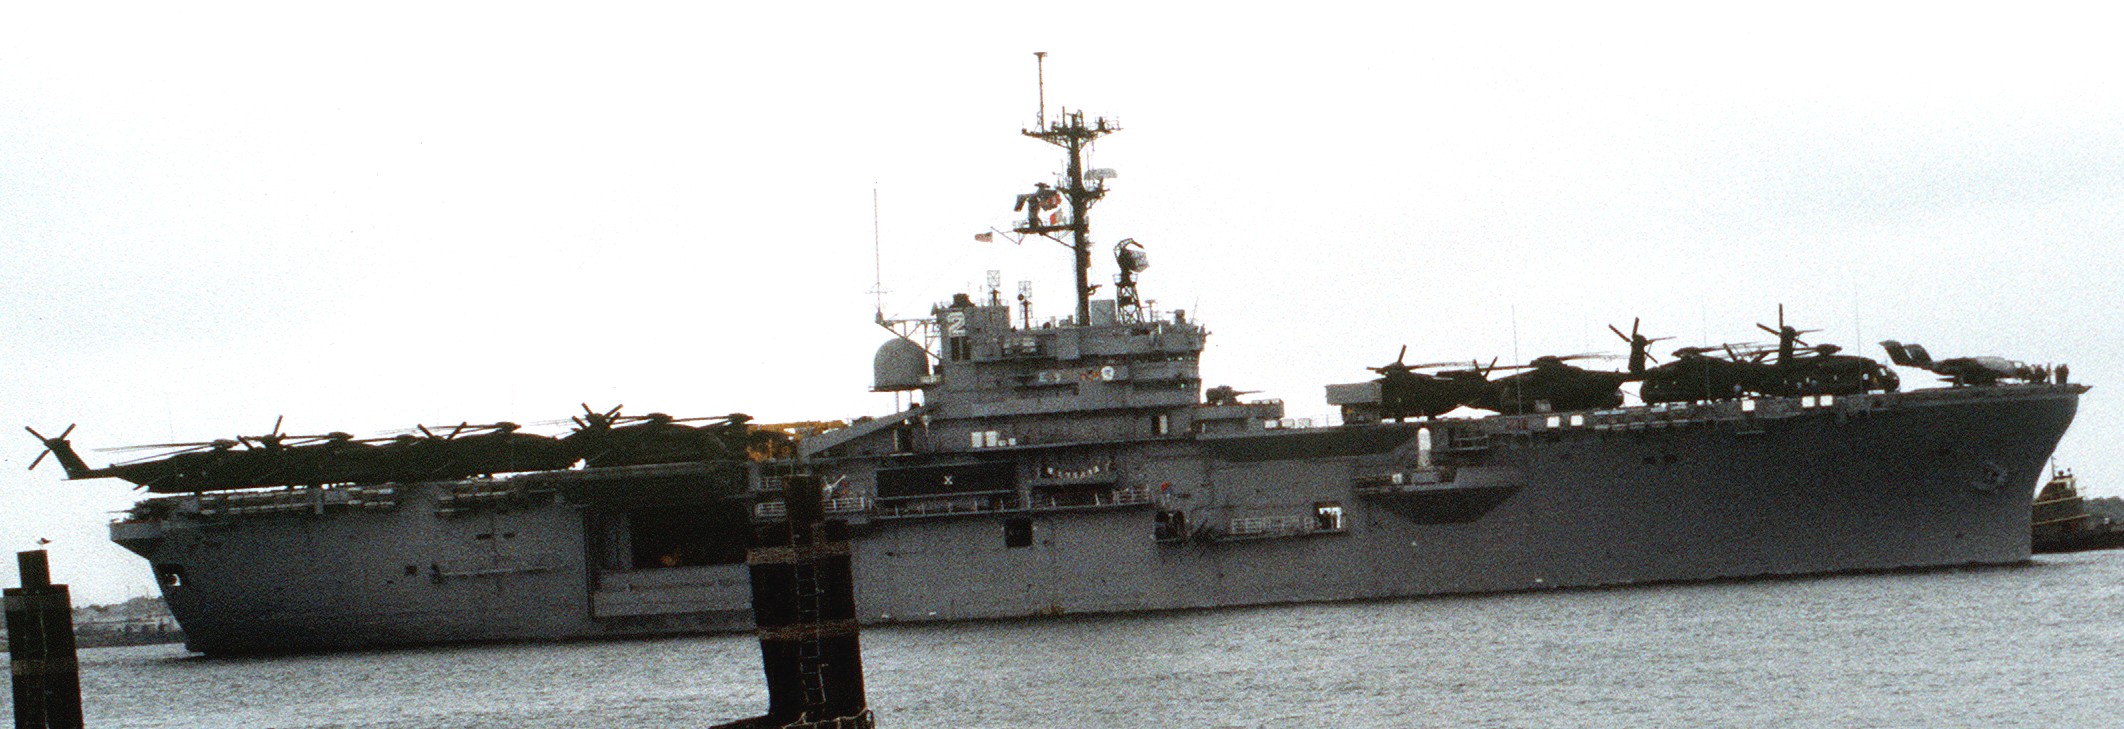 lph-2 uss iwo jima class amphibious assault ship landing platform helicopter us navy 59 morehead city